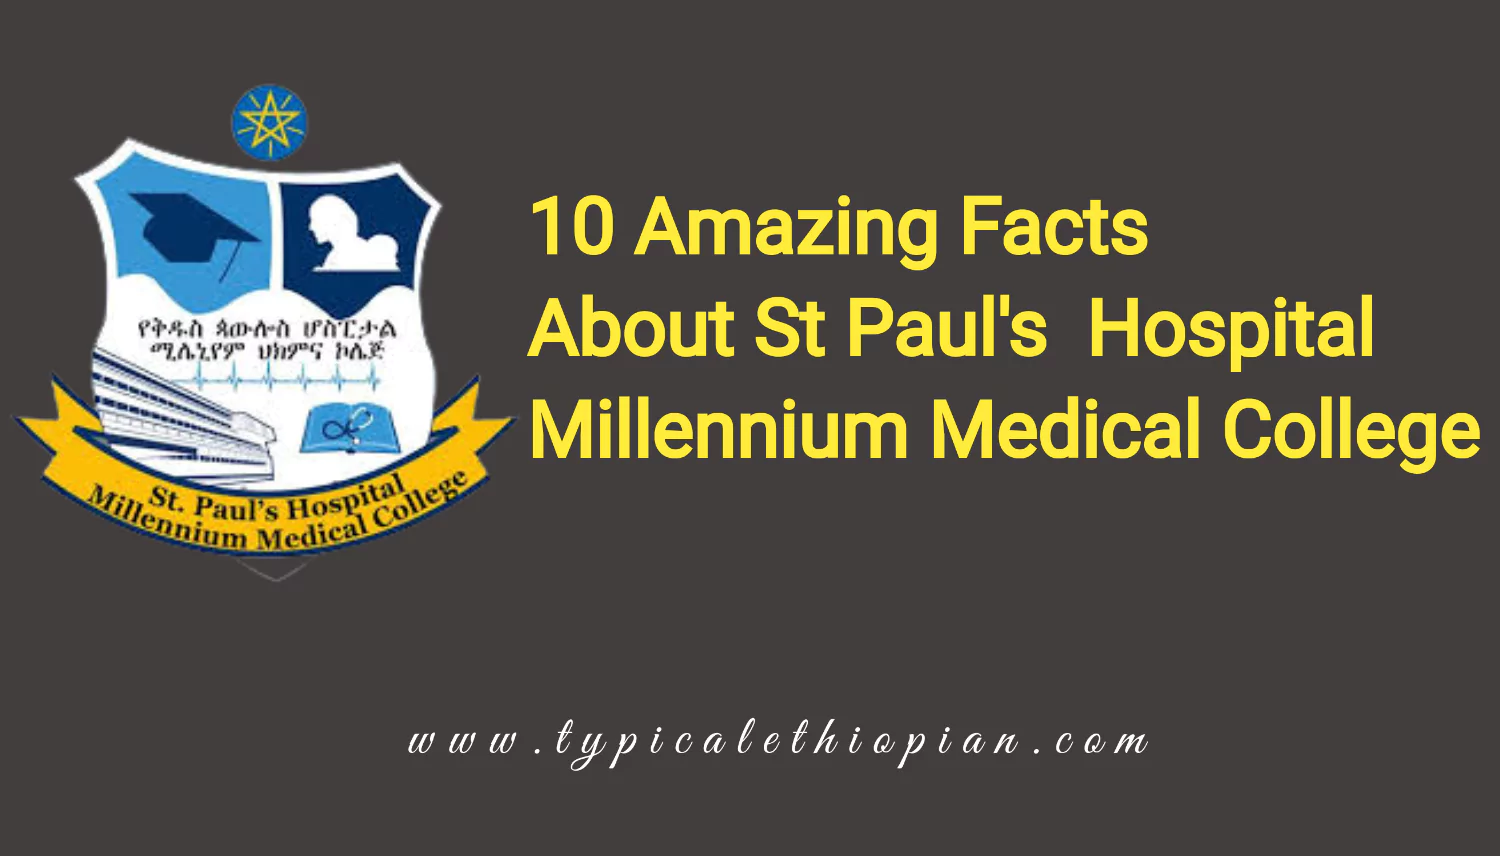 Facts about St. Paul’s Millennium Medical College